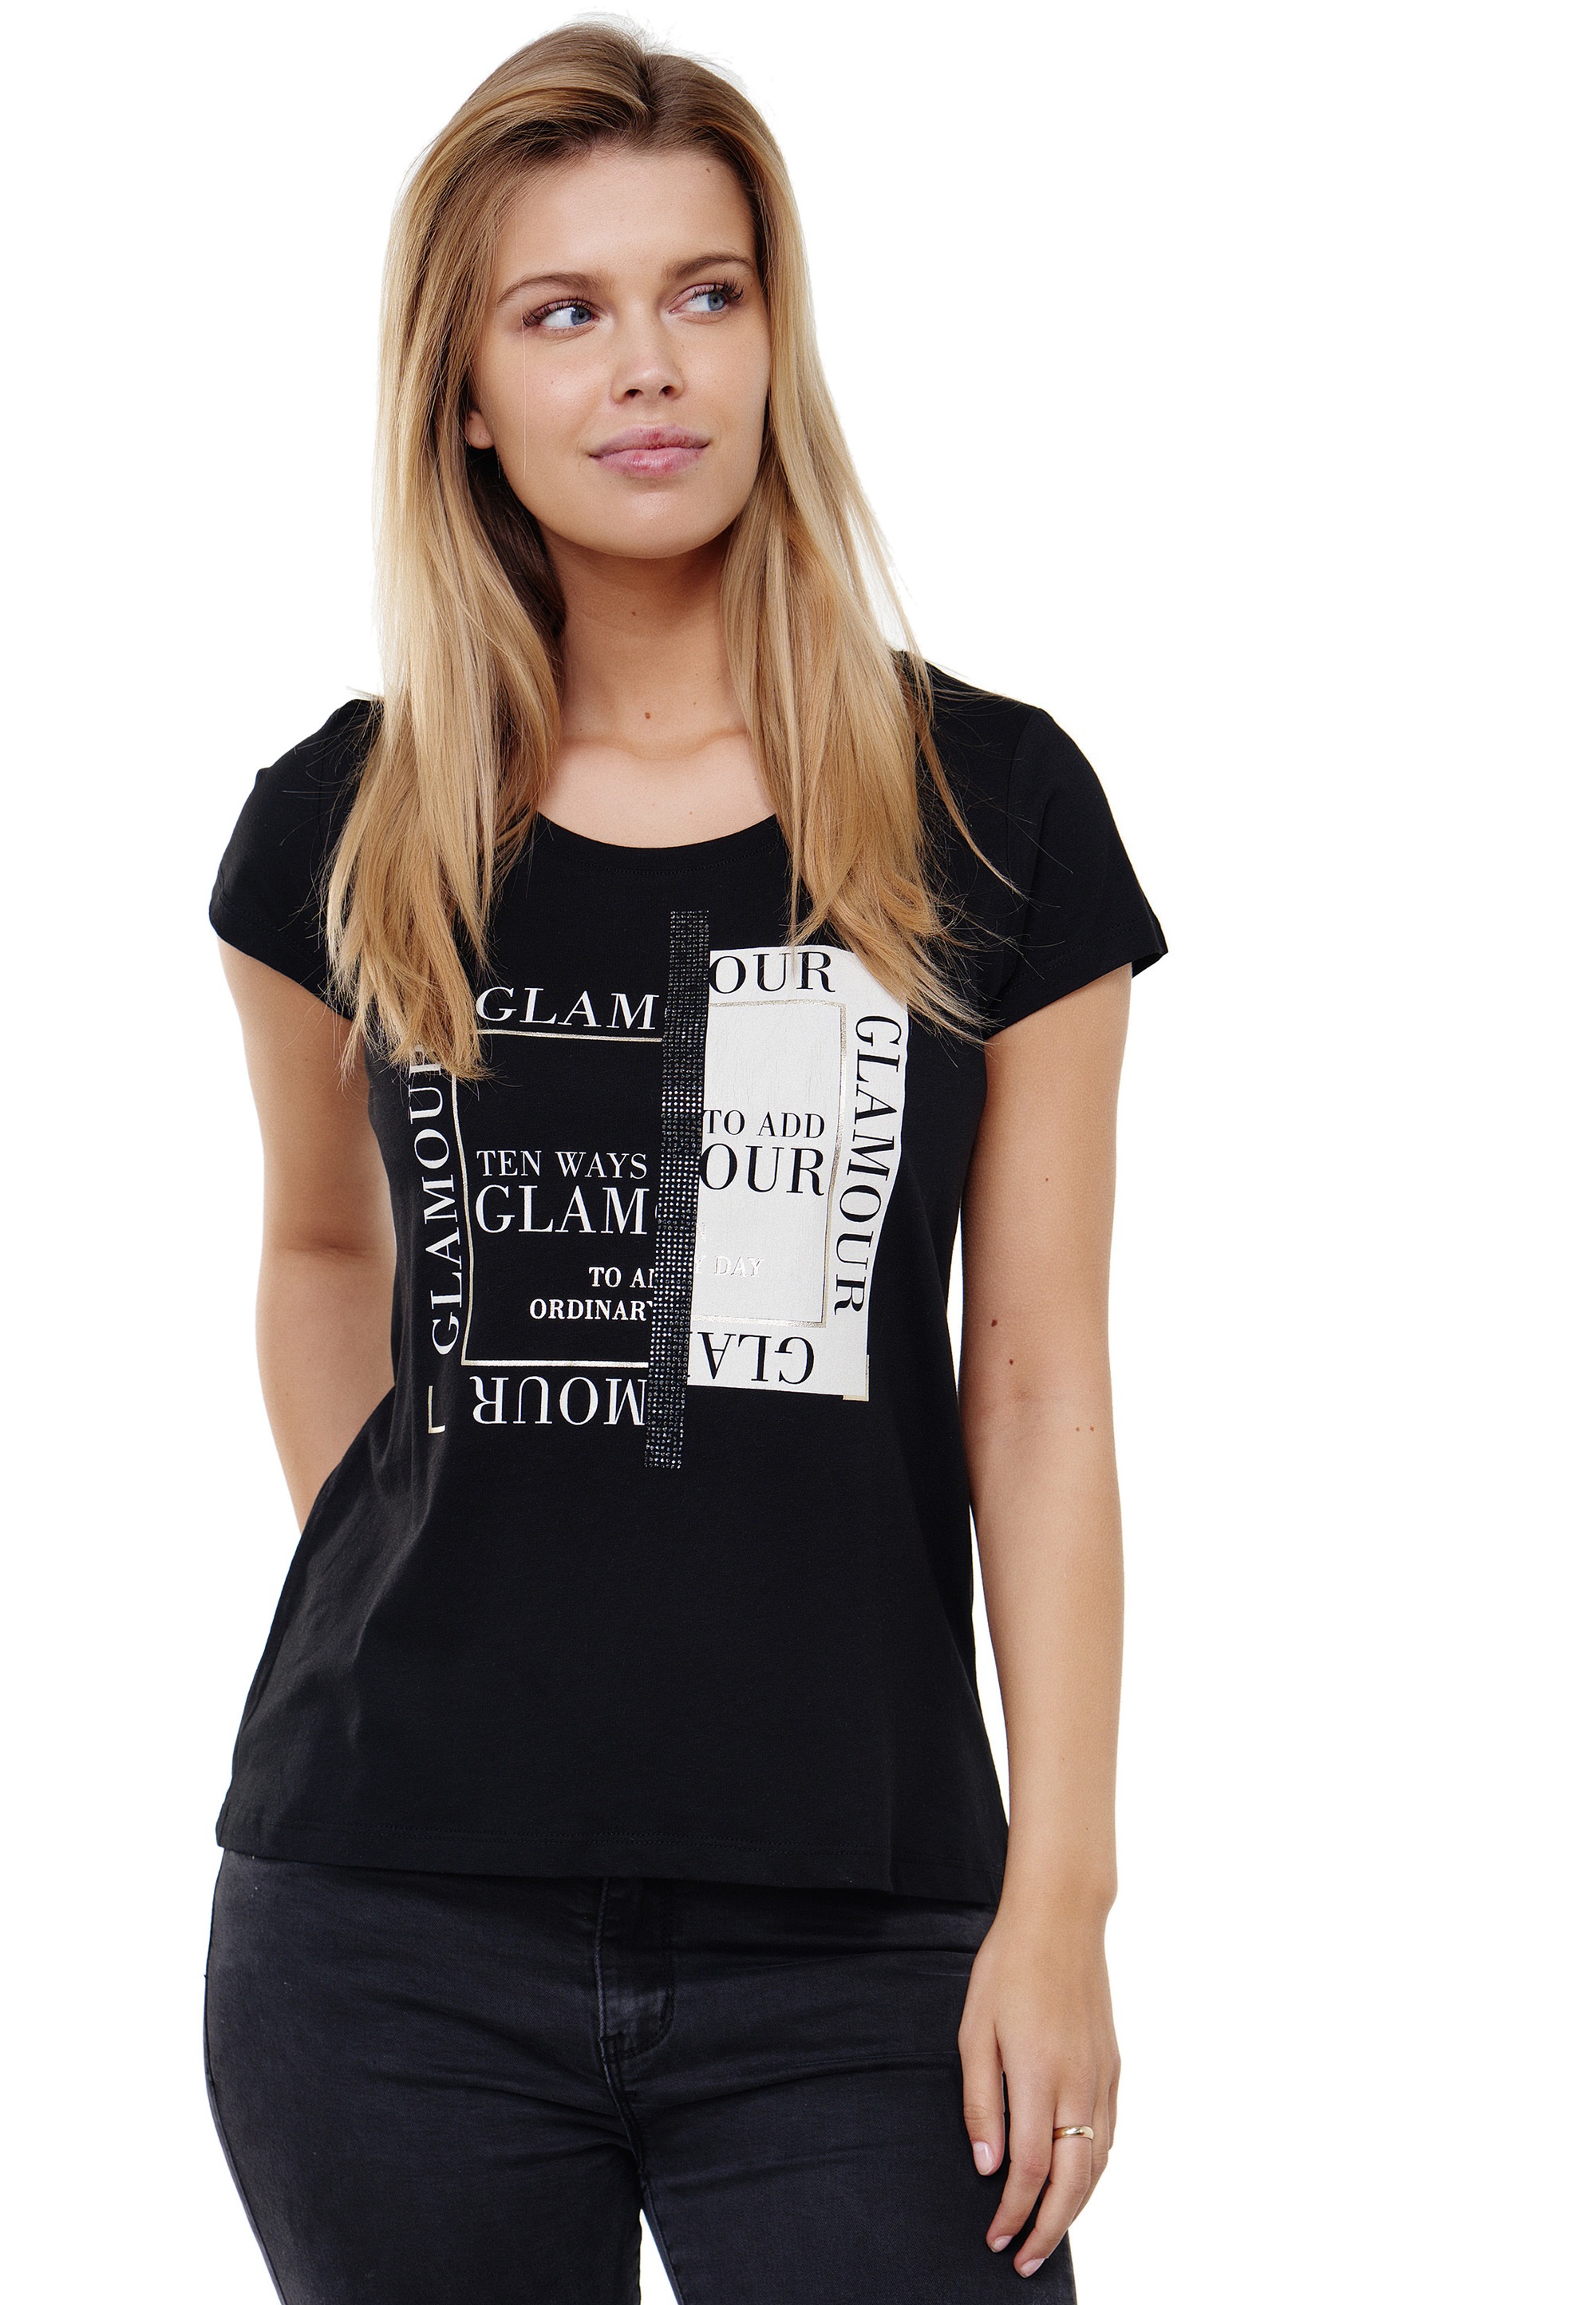 modernem | mit Brustprint BAUR kaufen T-Shirt, Decay